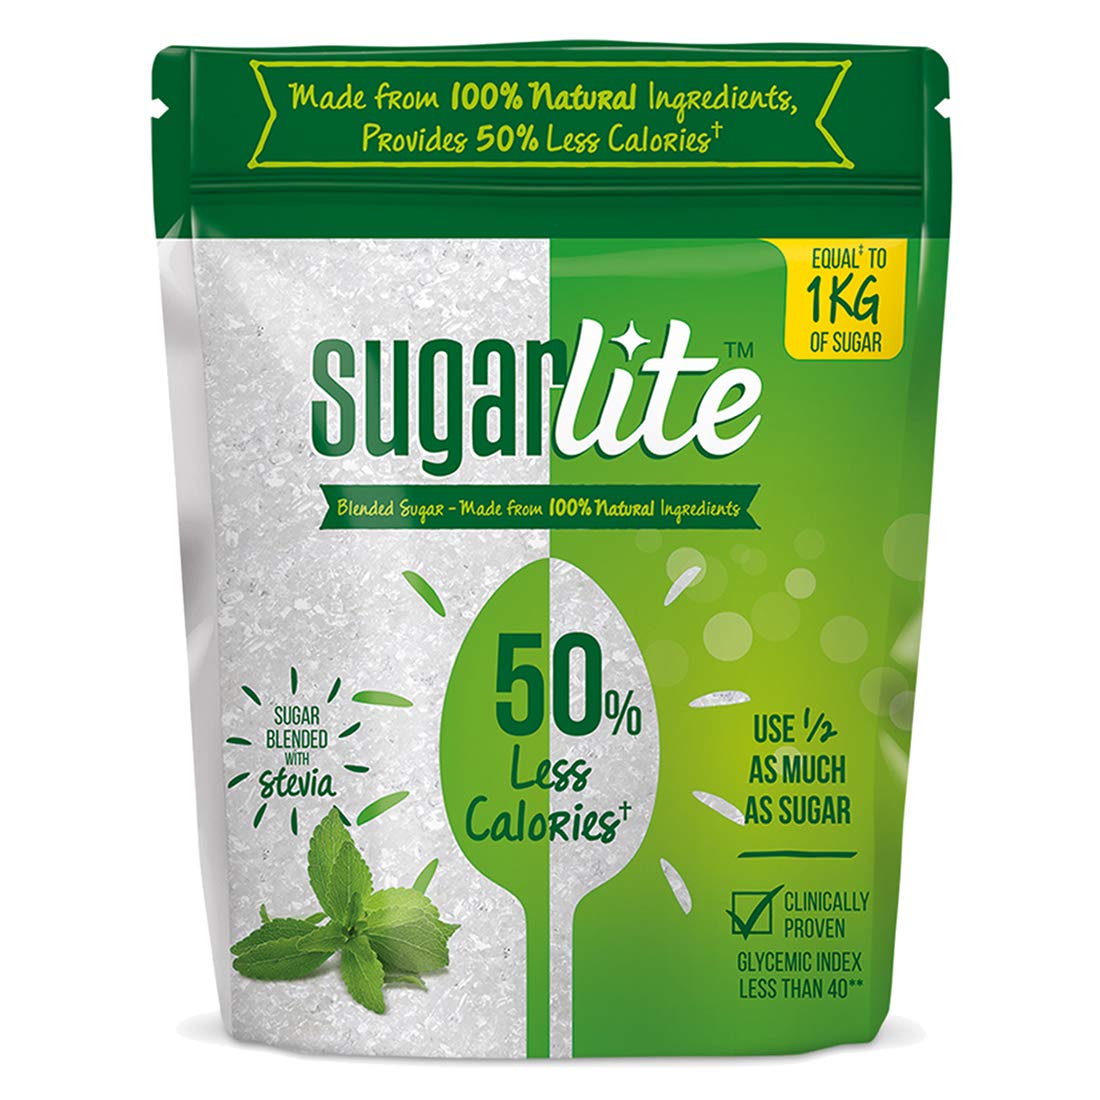 Sugarlite Sugar, 500 gm, Pack of 1 